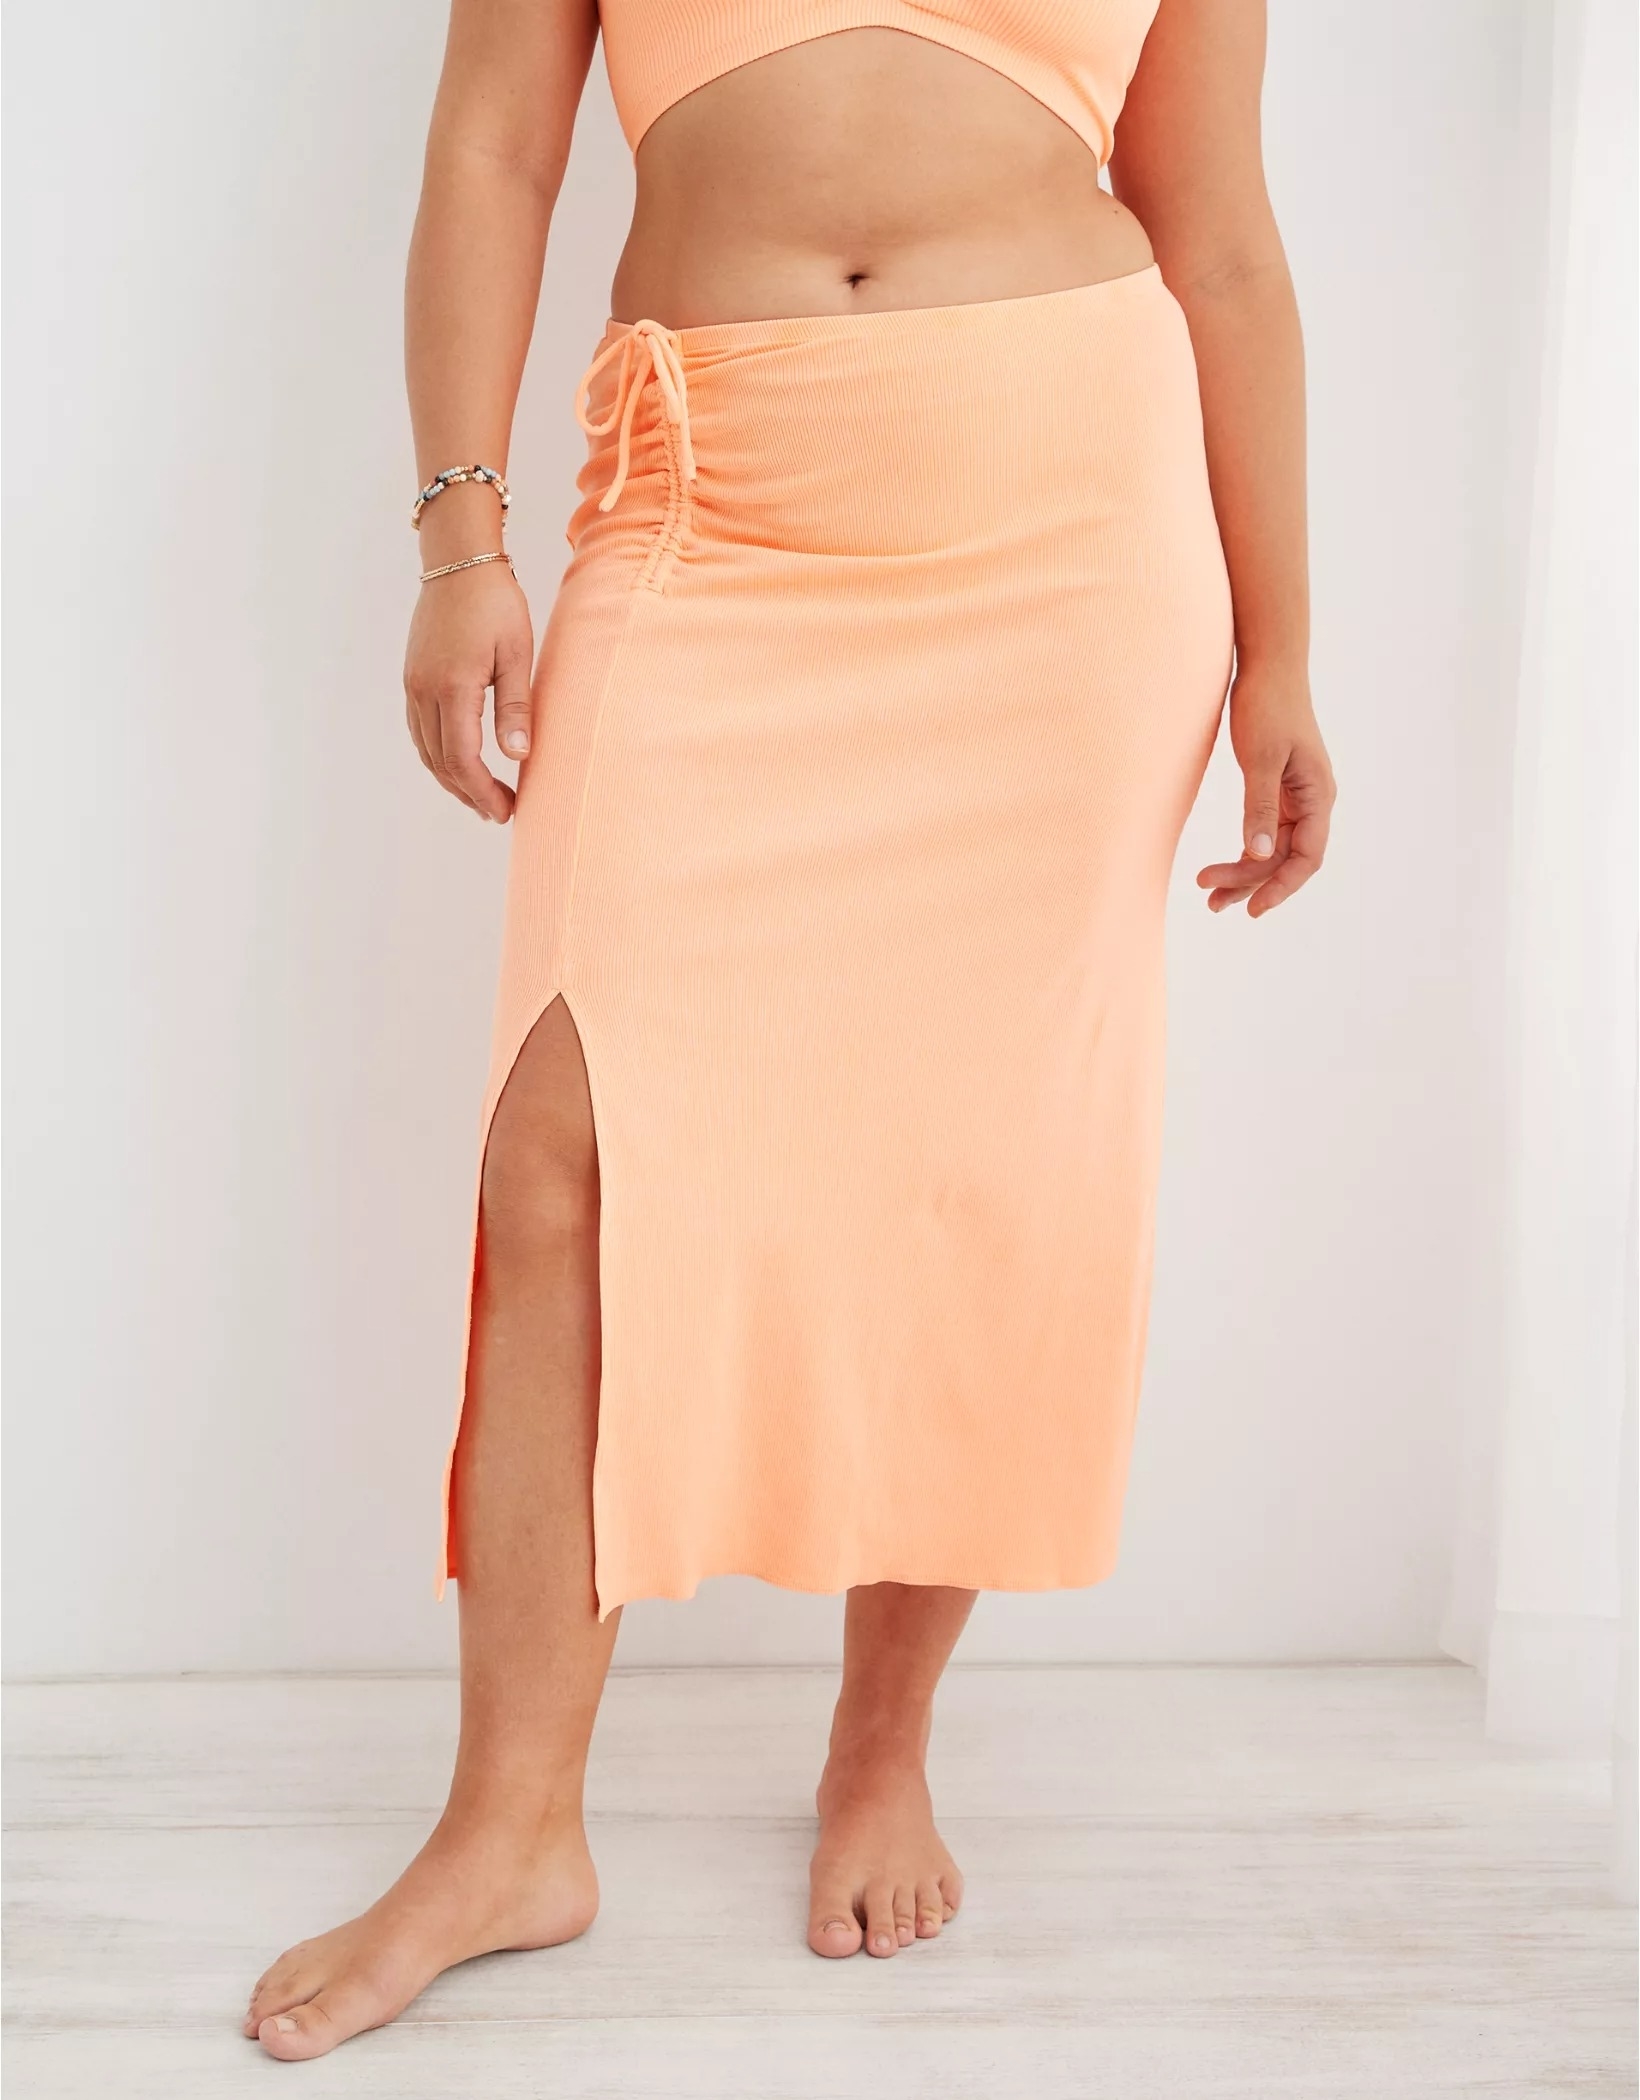 Model wearing midi skirt in peach